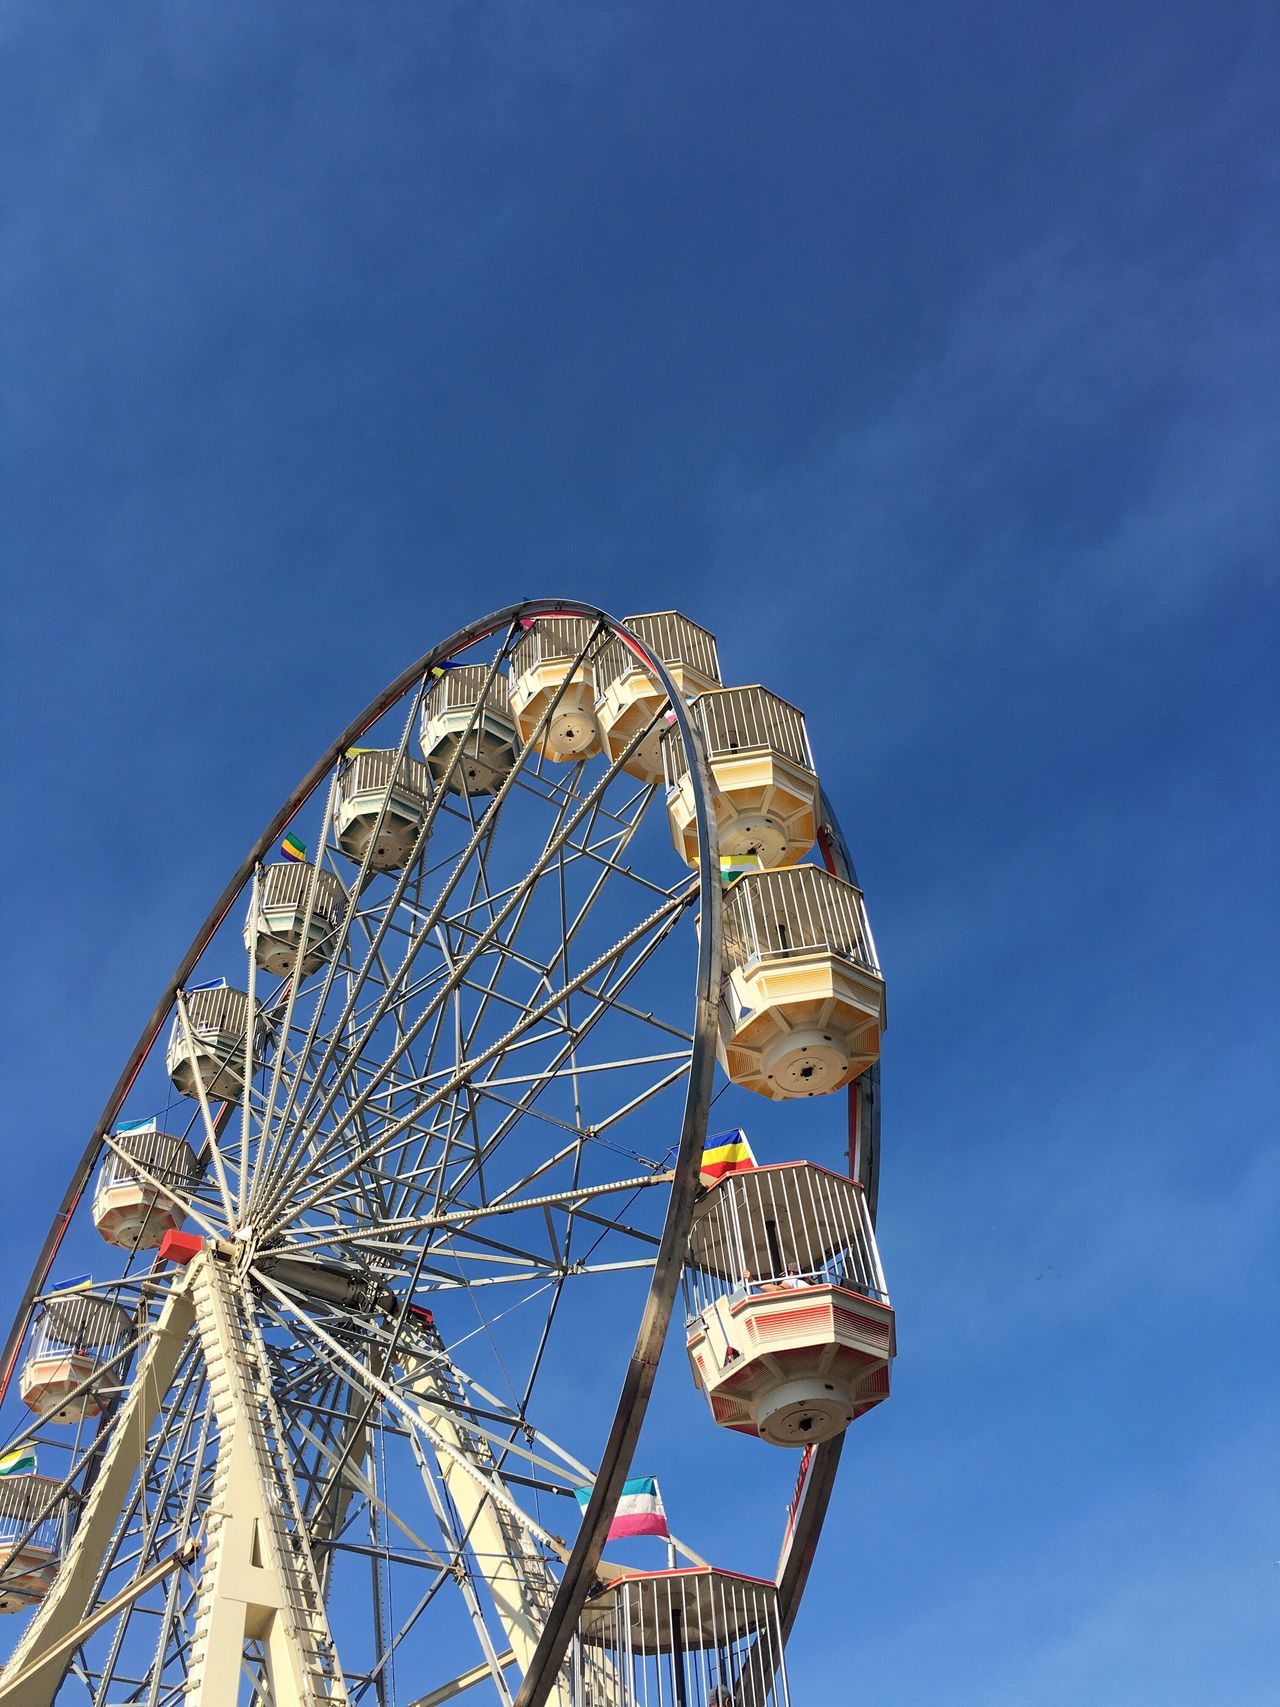 Ferris wheel set against clear blue sky